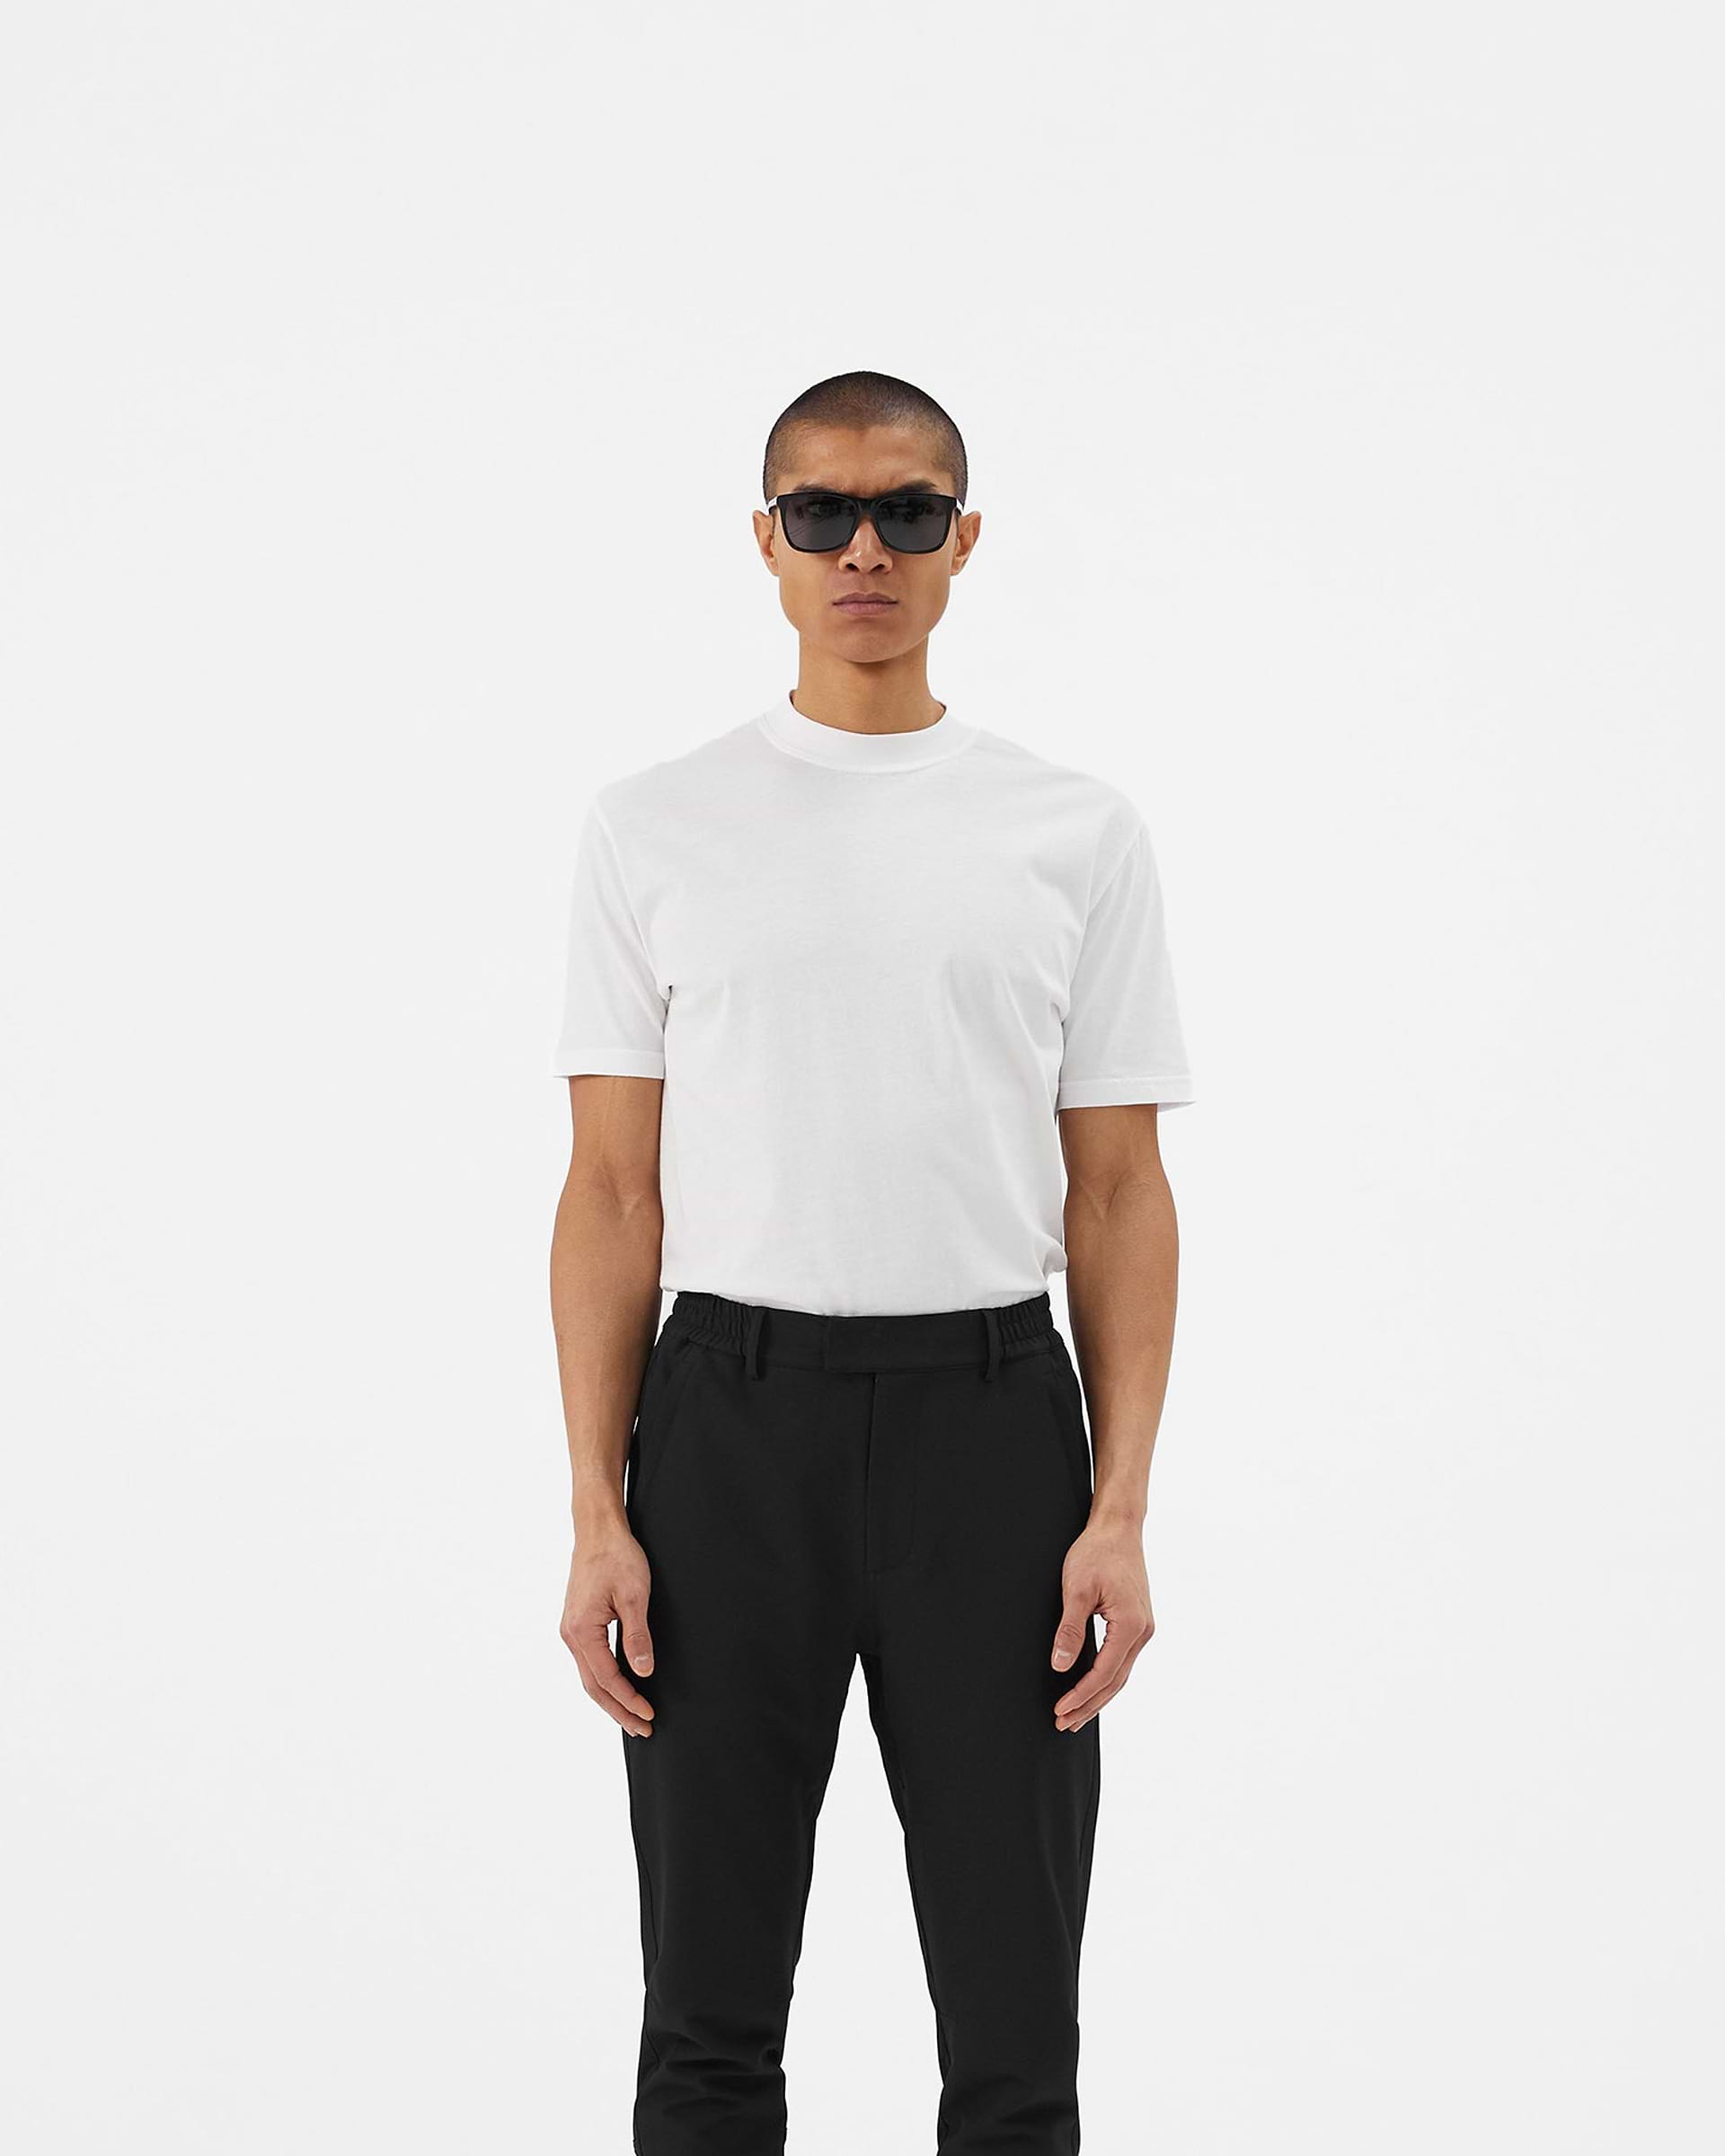 The Core T-Shirt | Flat White | Represent Clo